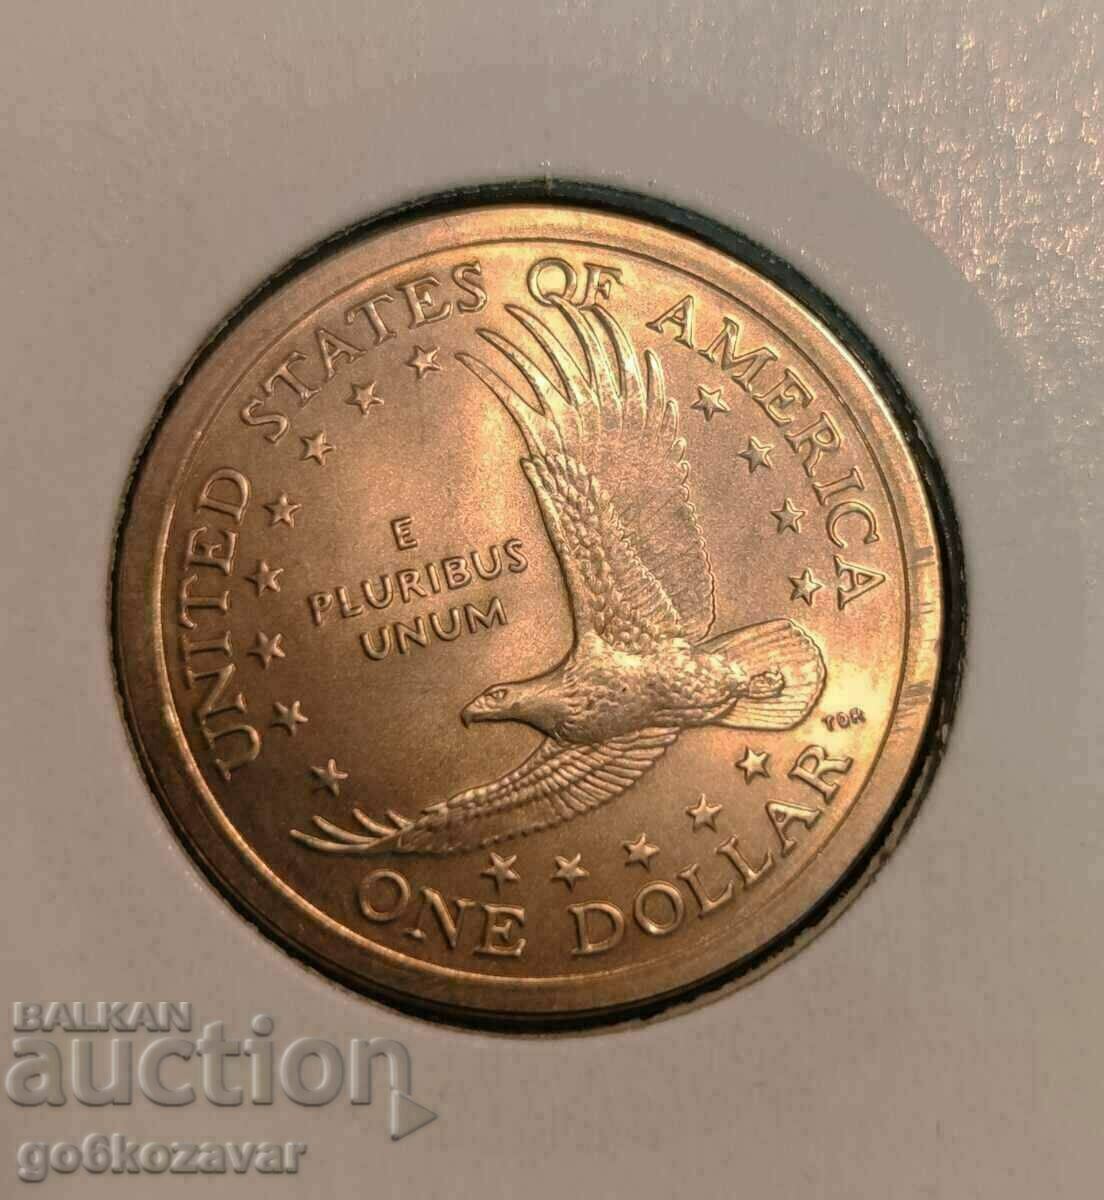 1 dolar SUA 2005 UNC